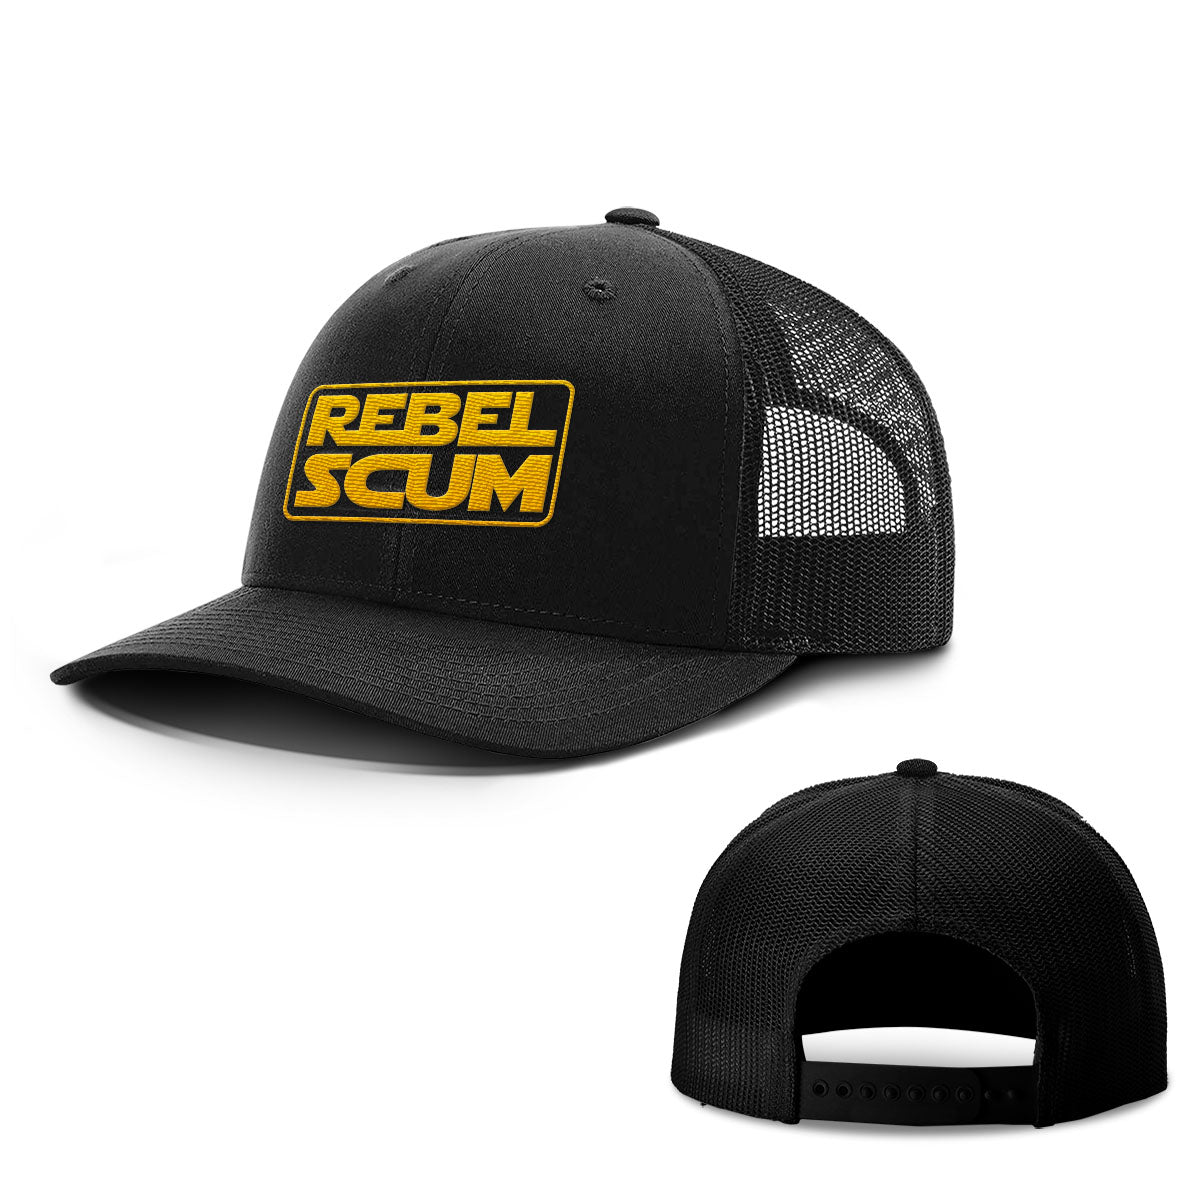 Rebel Scum Logo Hats - BustedTees.com